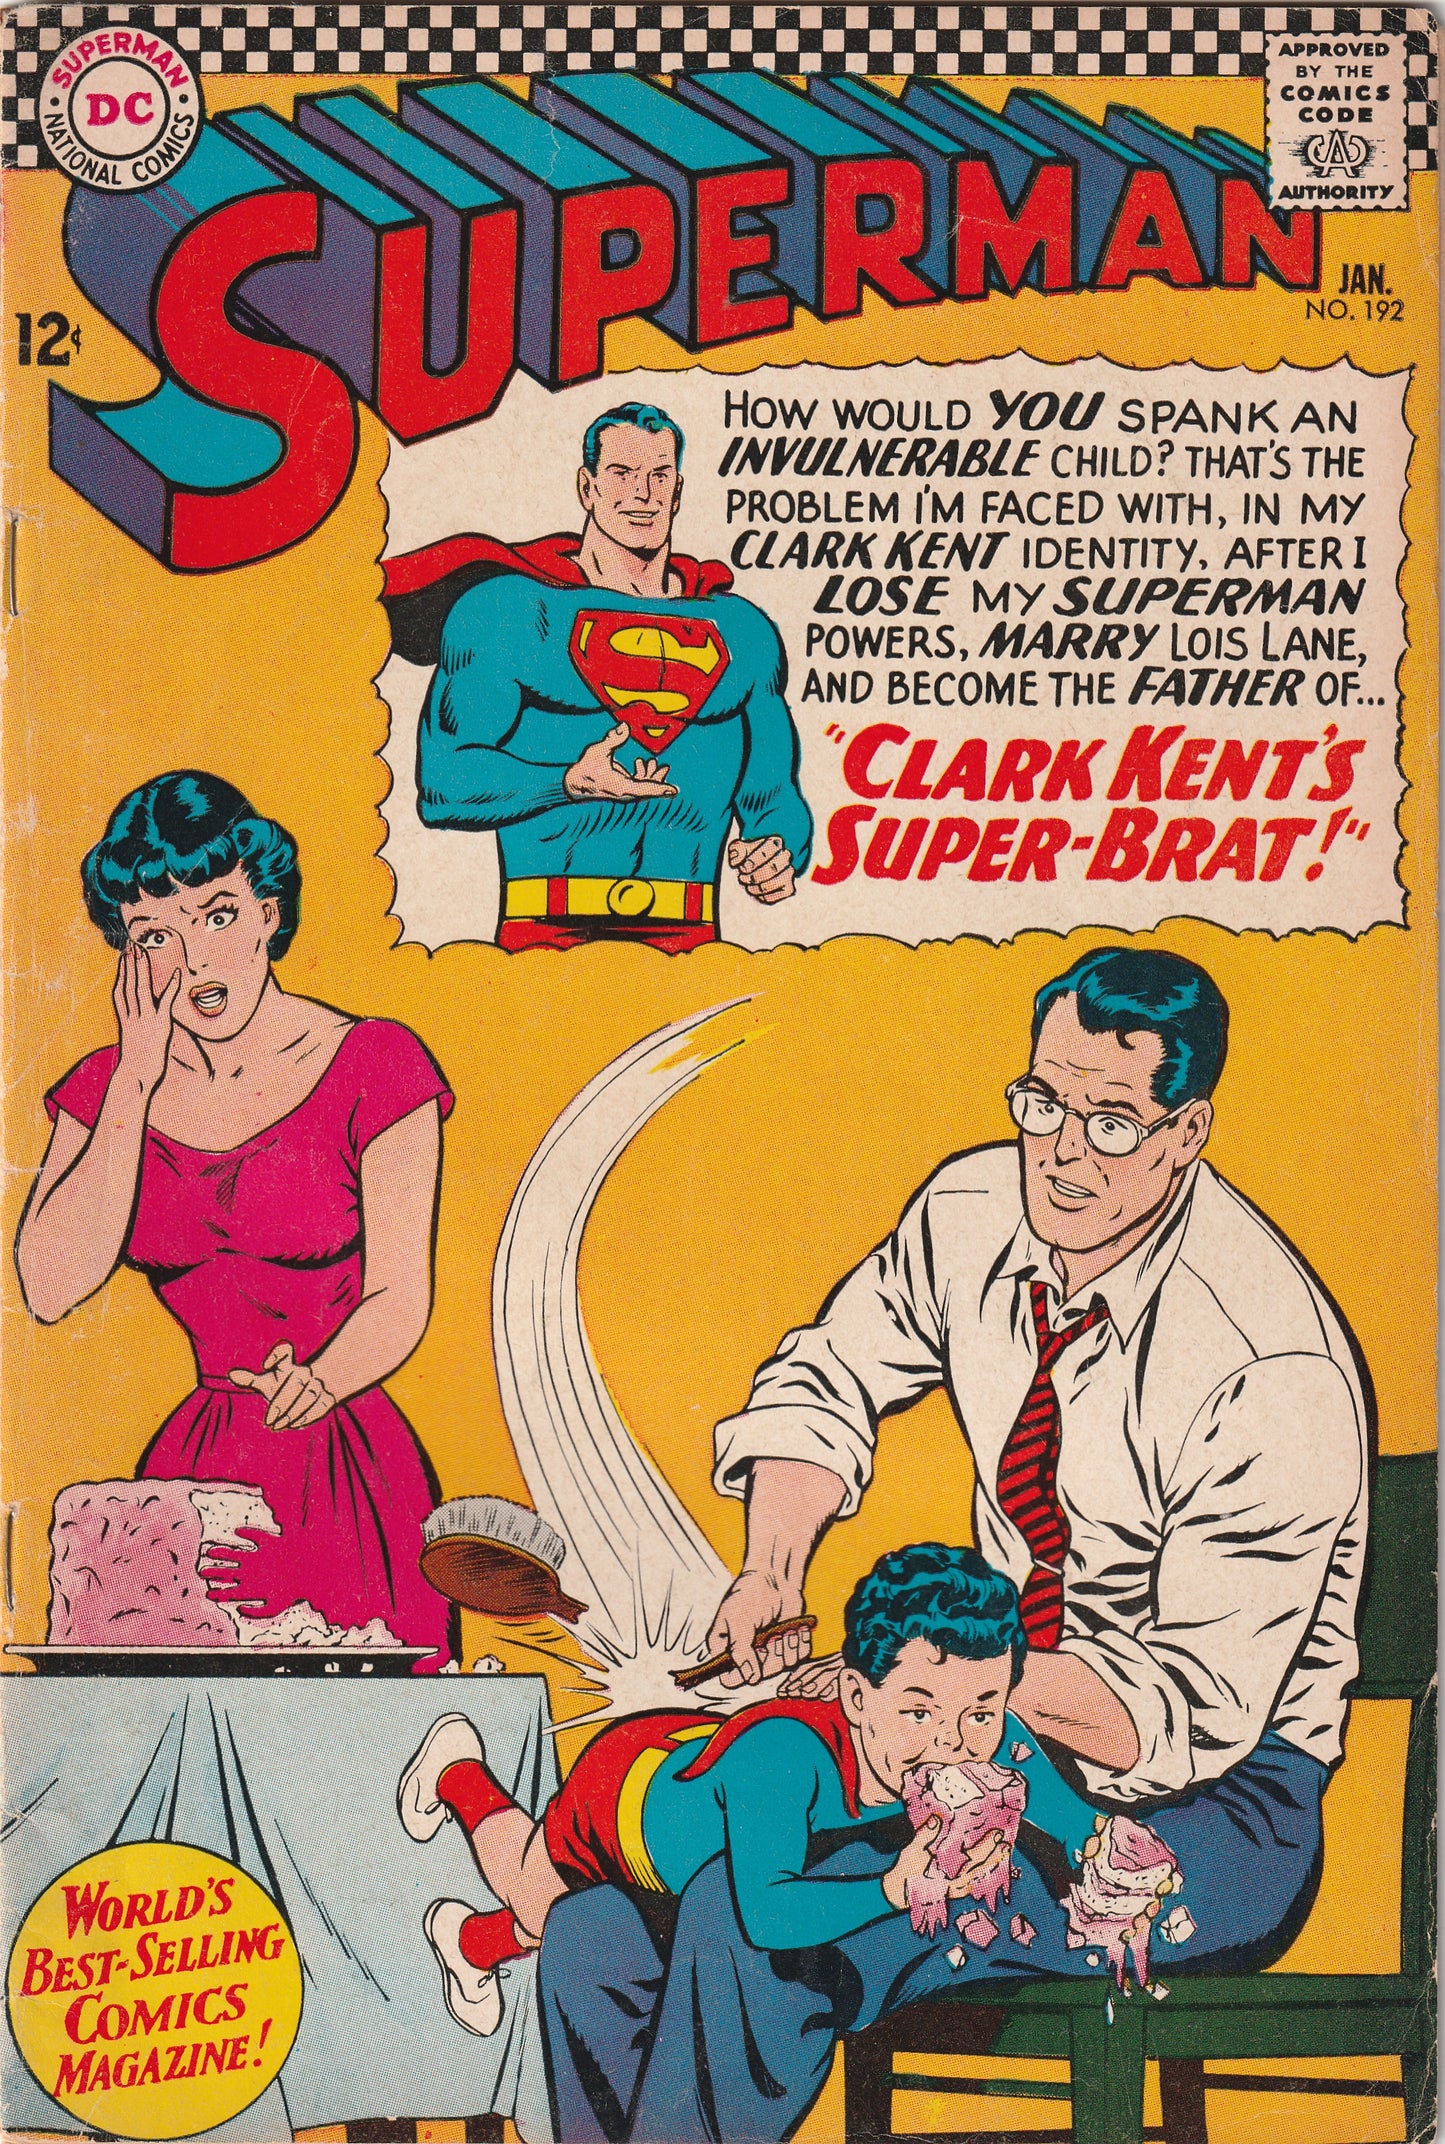 Superman #192 (1967)